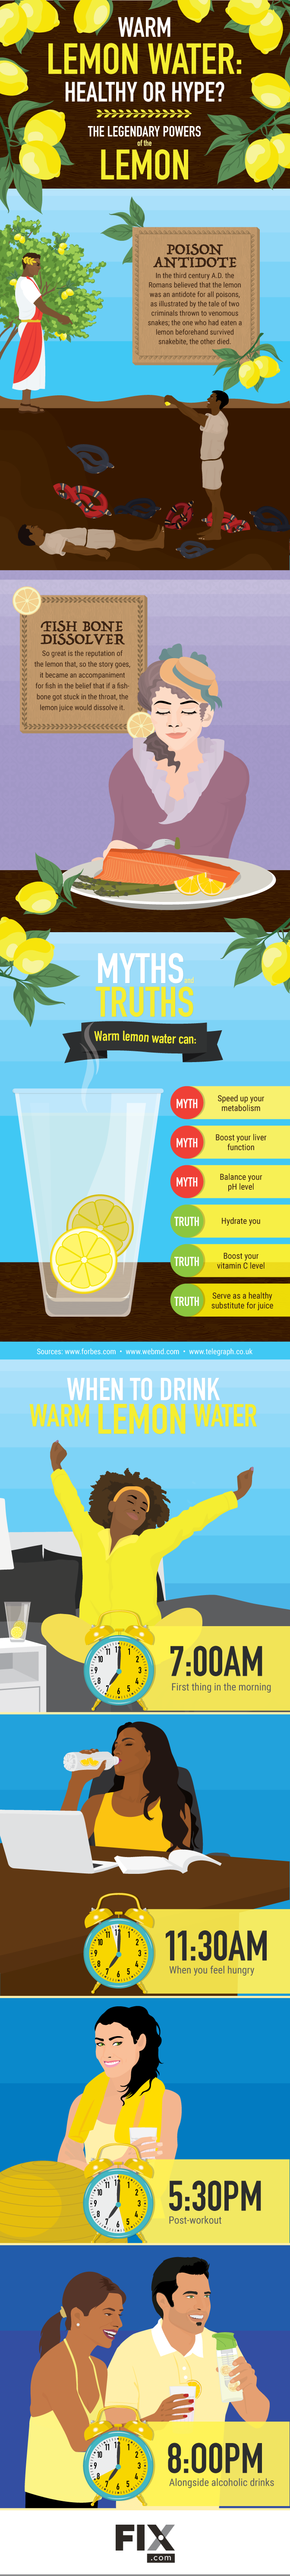 Advantages of lemon water infographic